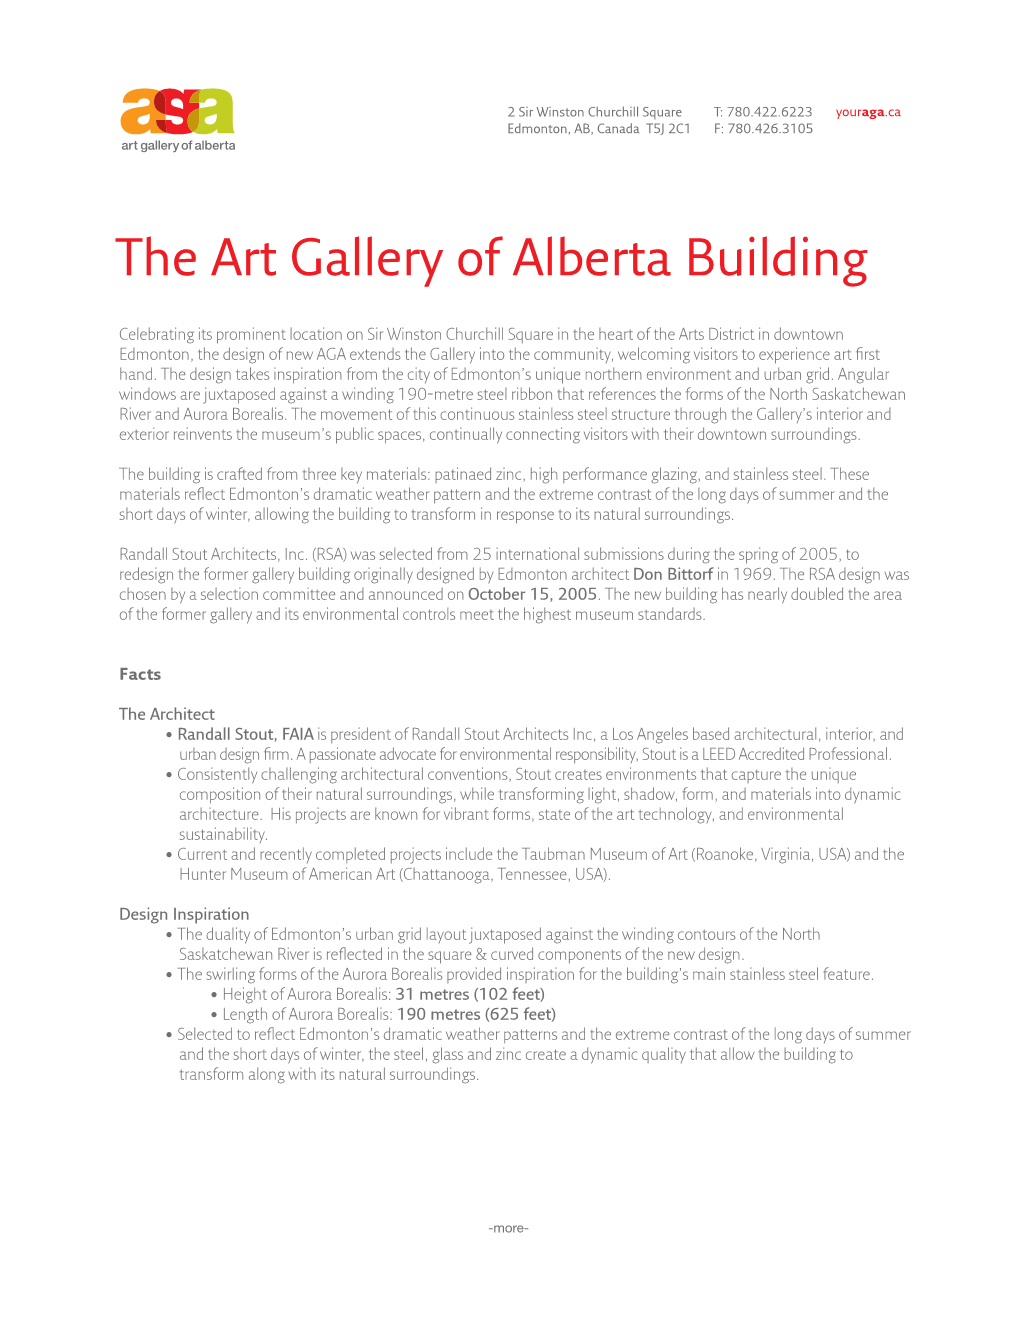 The Art Gallery of Alberta Building